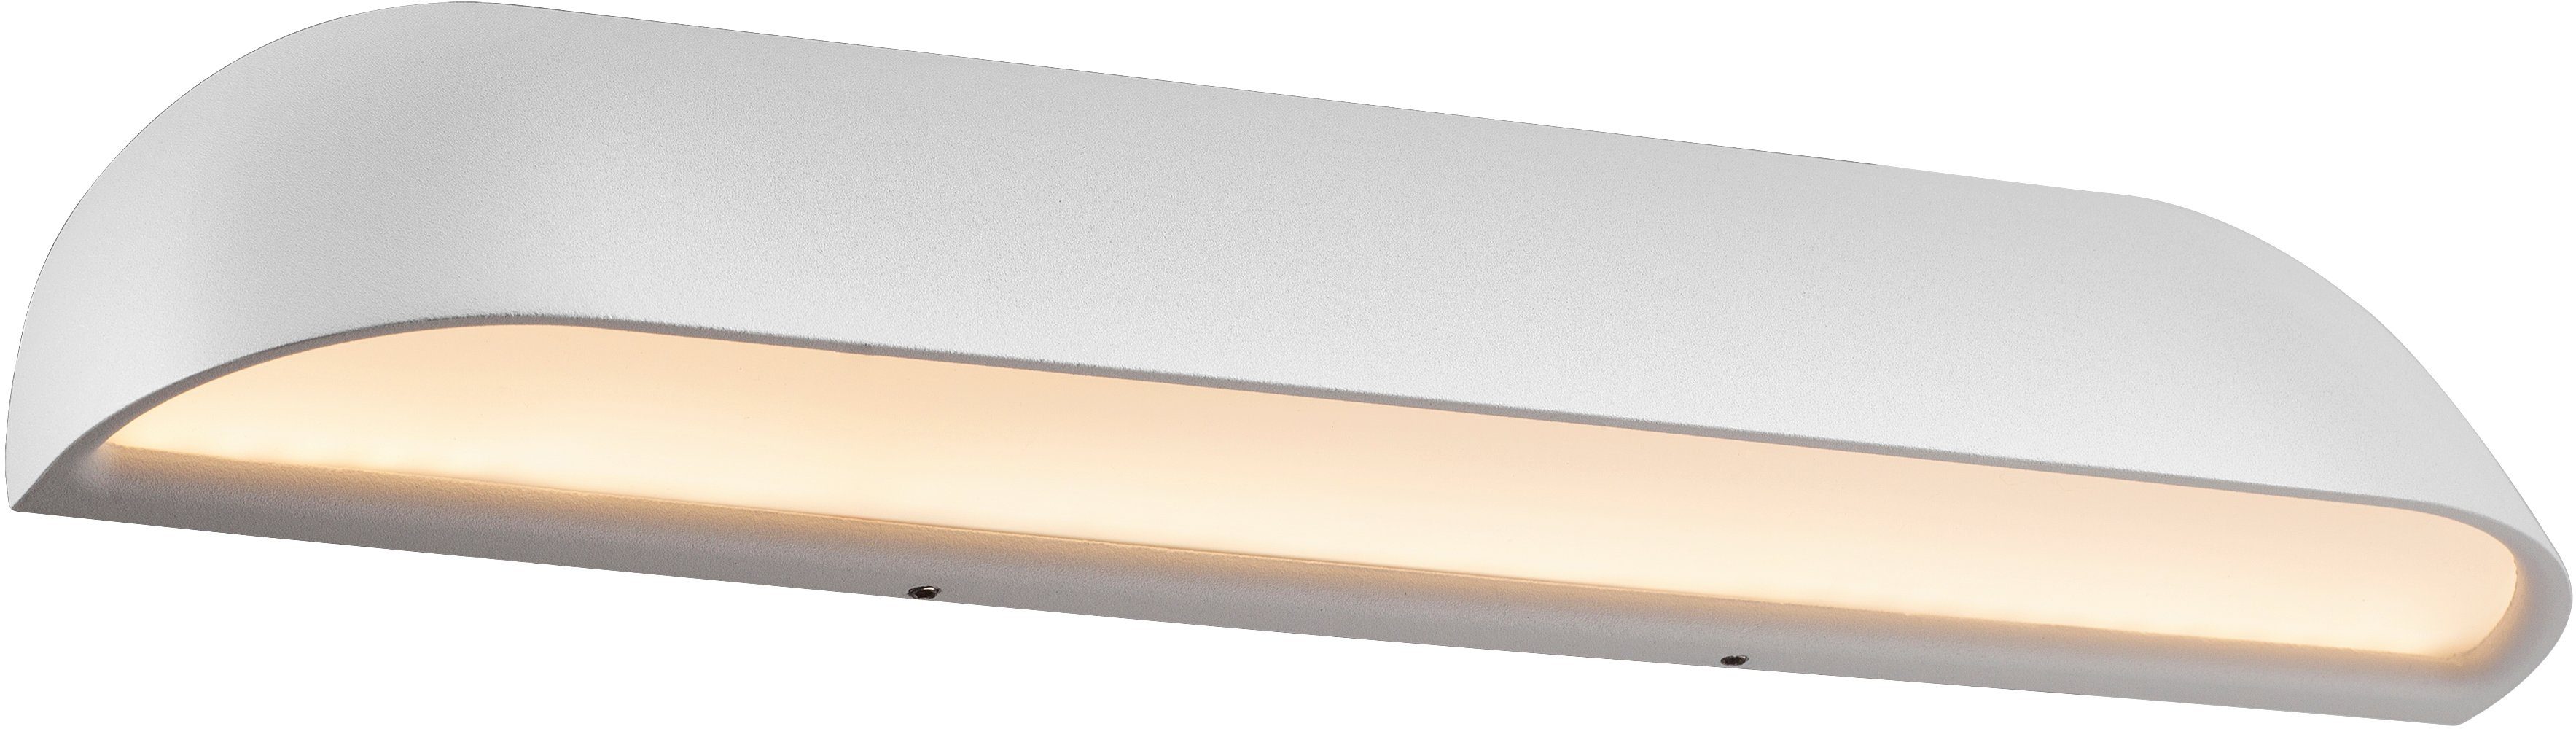 Nordlux LED Wandleuchte inkl. LED Garantie FRONT, Warmweiß, integriert, Jahre 5 LED Modul, fest